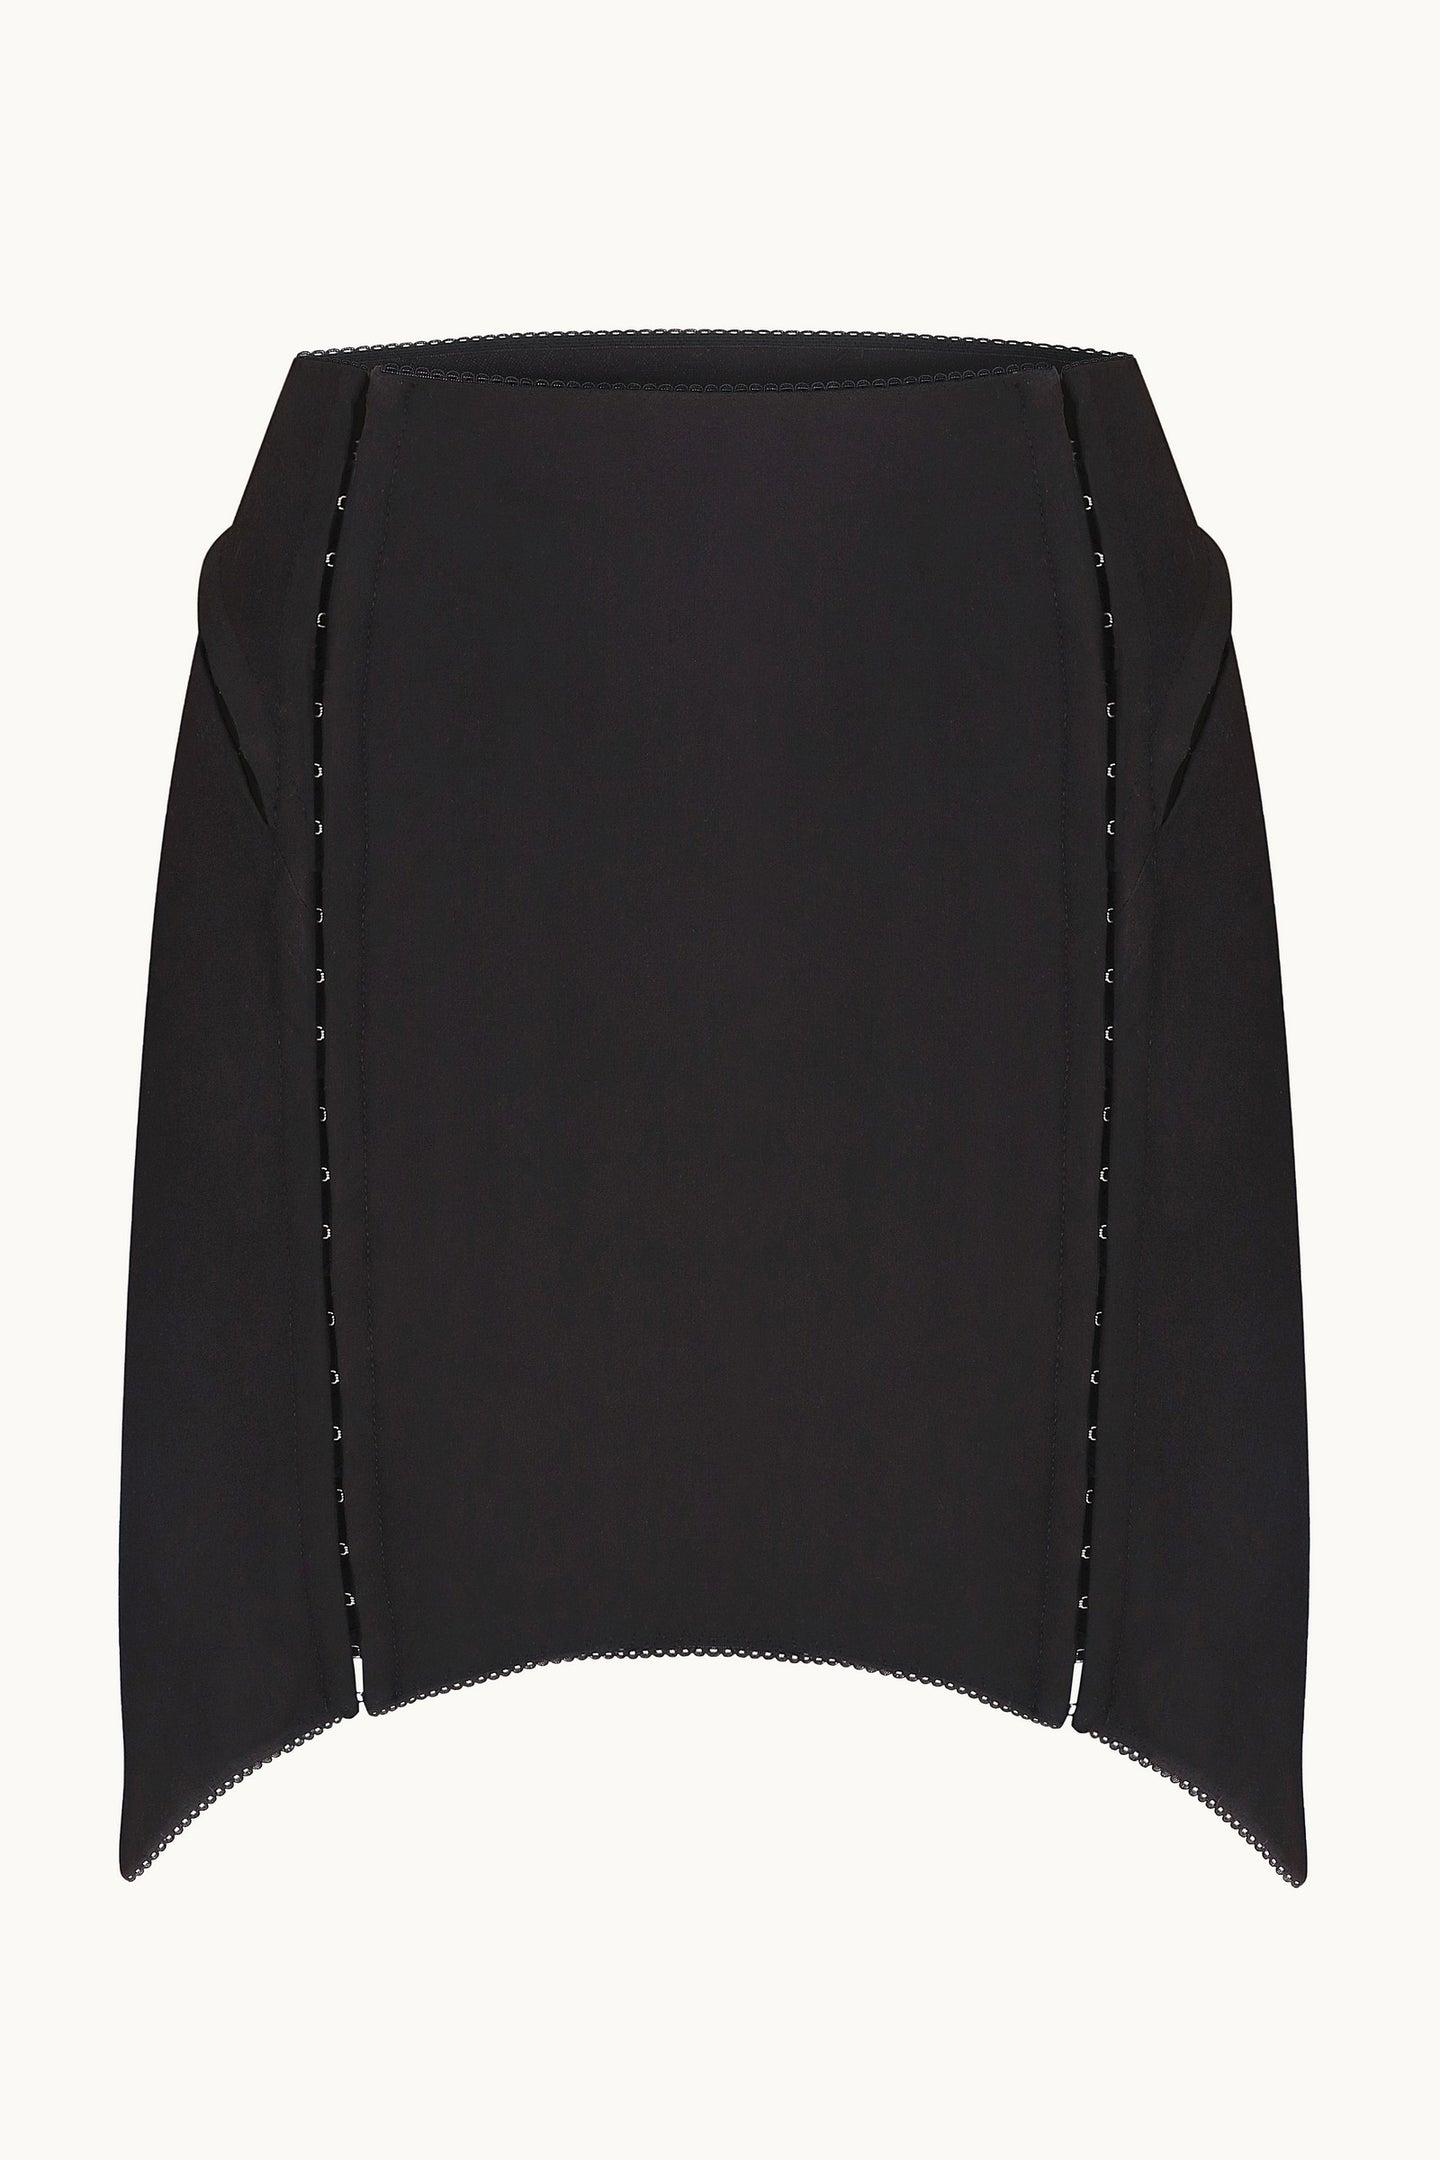 Madi black skirt front view